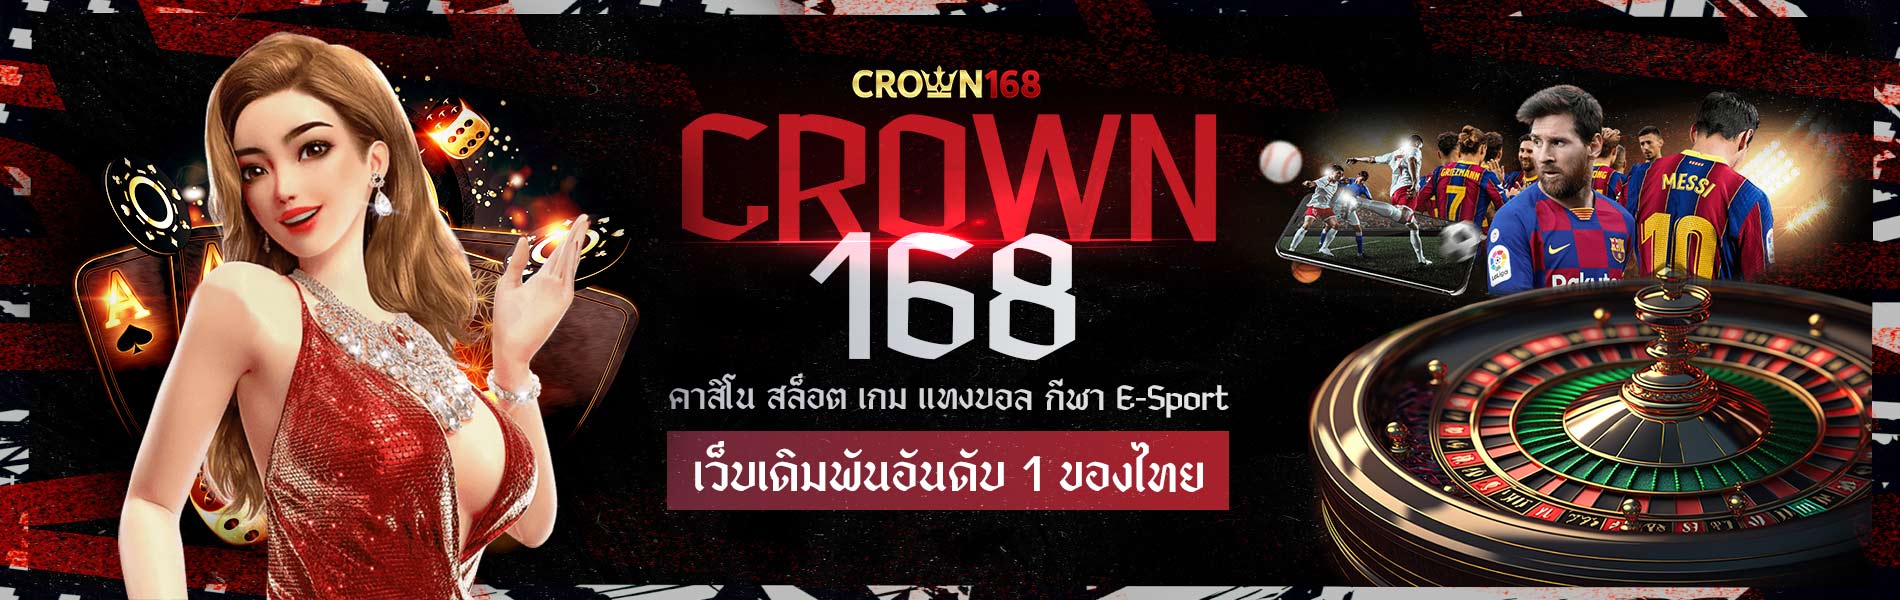 Crown168--เว็บเดิมพันอันดับ-1-ของไทย-คาสิโน-สล็อต-เกม-แทงบอล-กีฬา-E-Sport